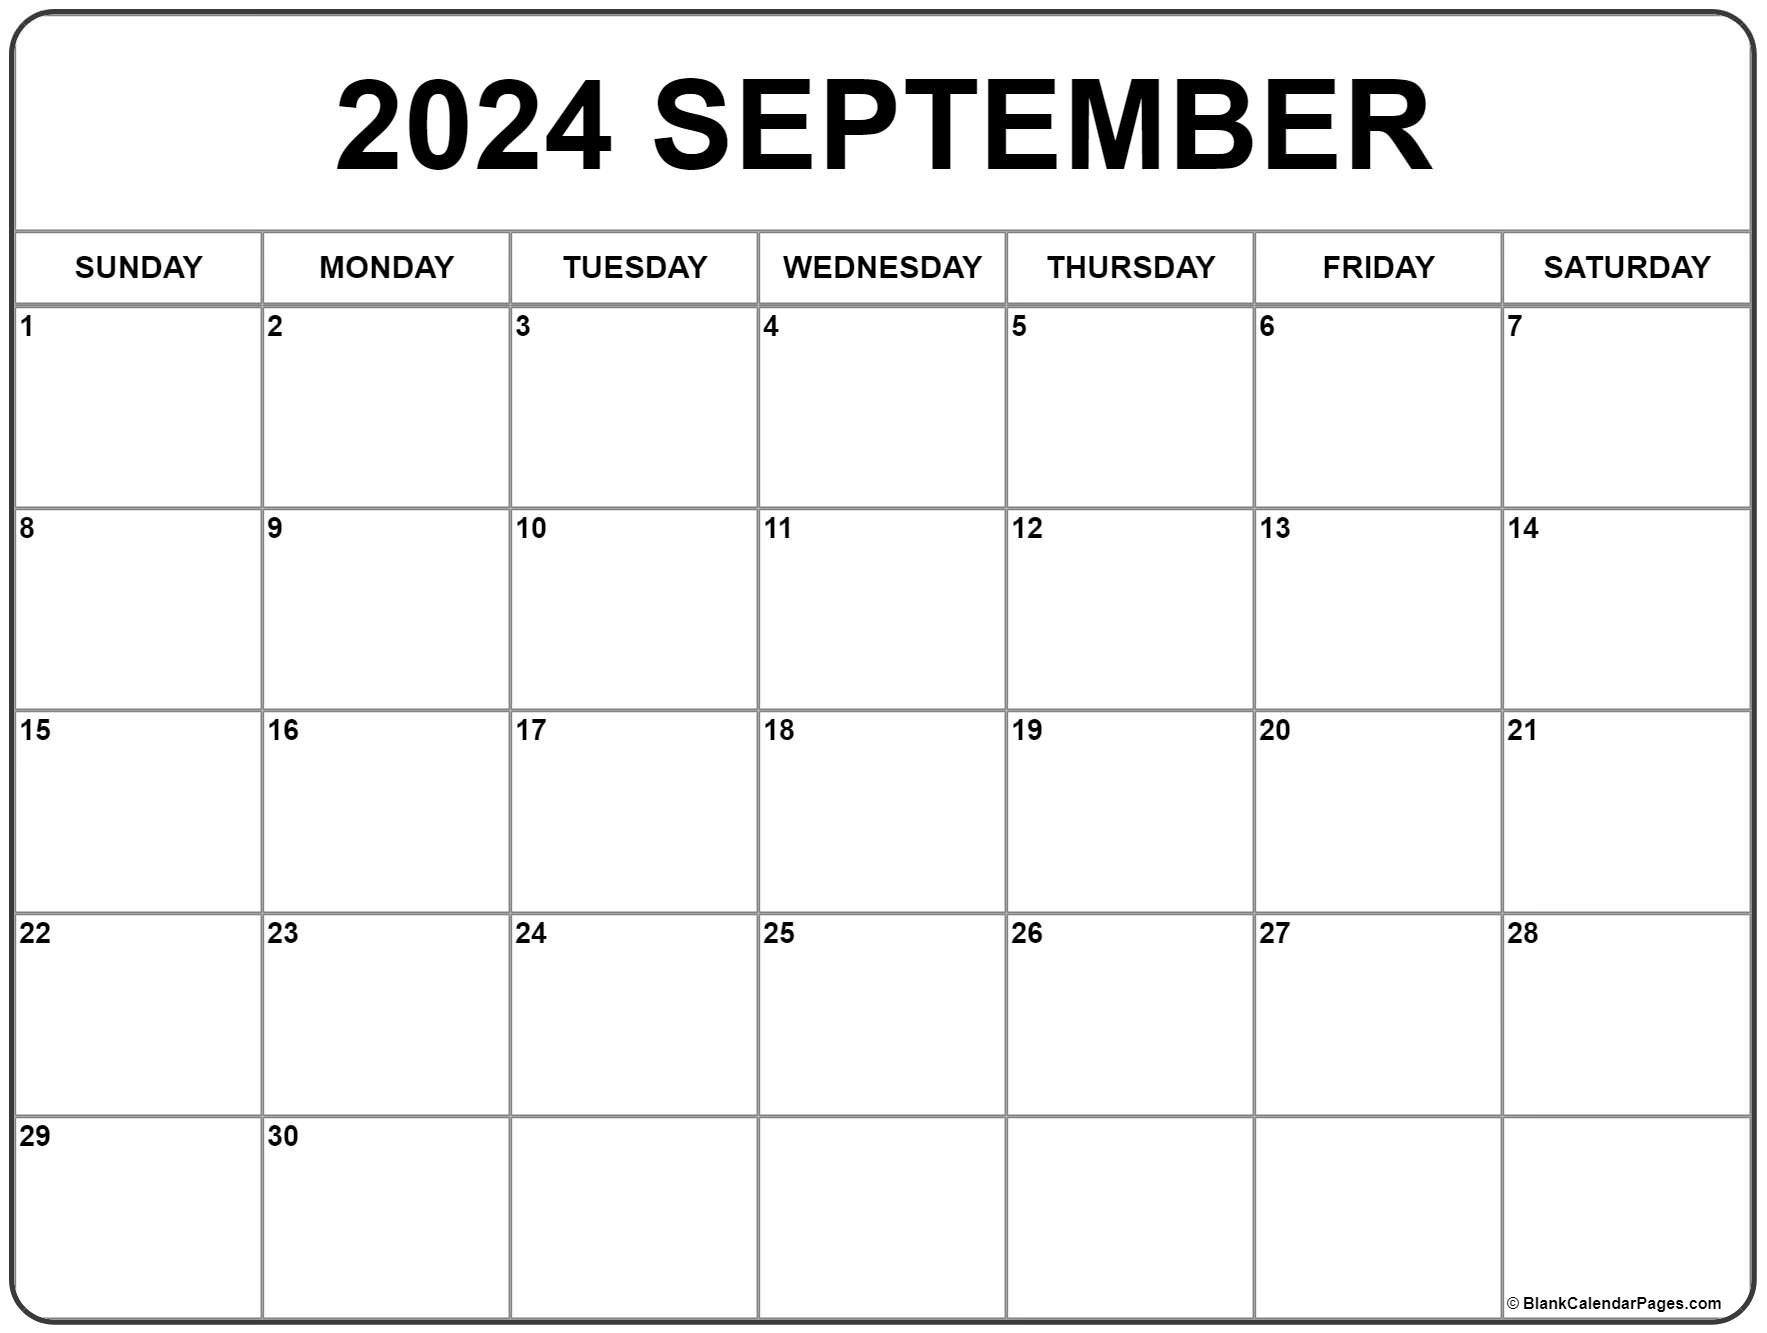 September 2024 Calendar | Free Printable Calendar intended for Free Printable Appointment Calendar September 2024